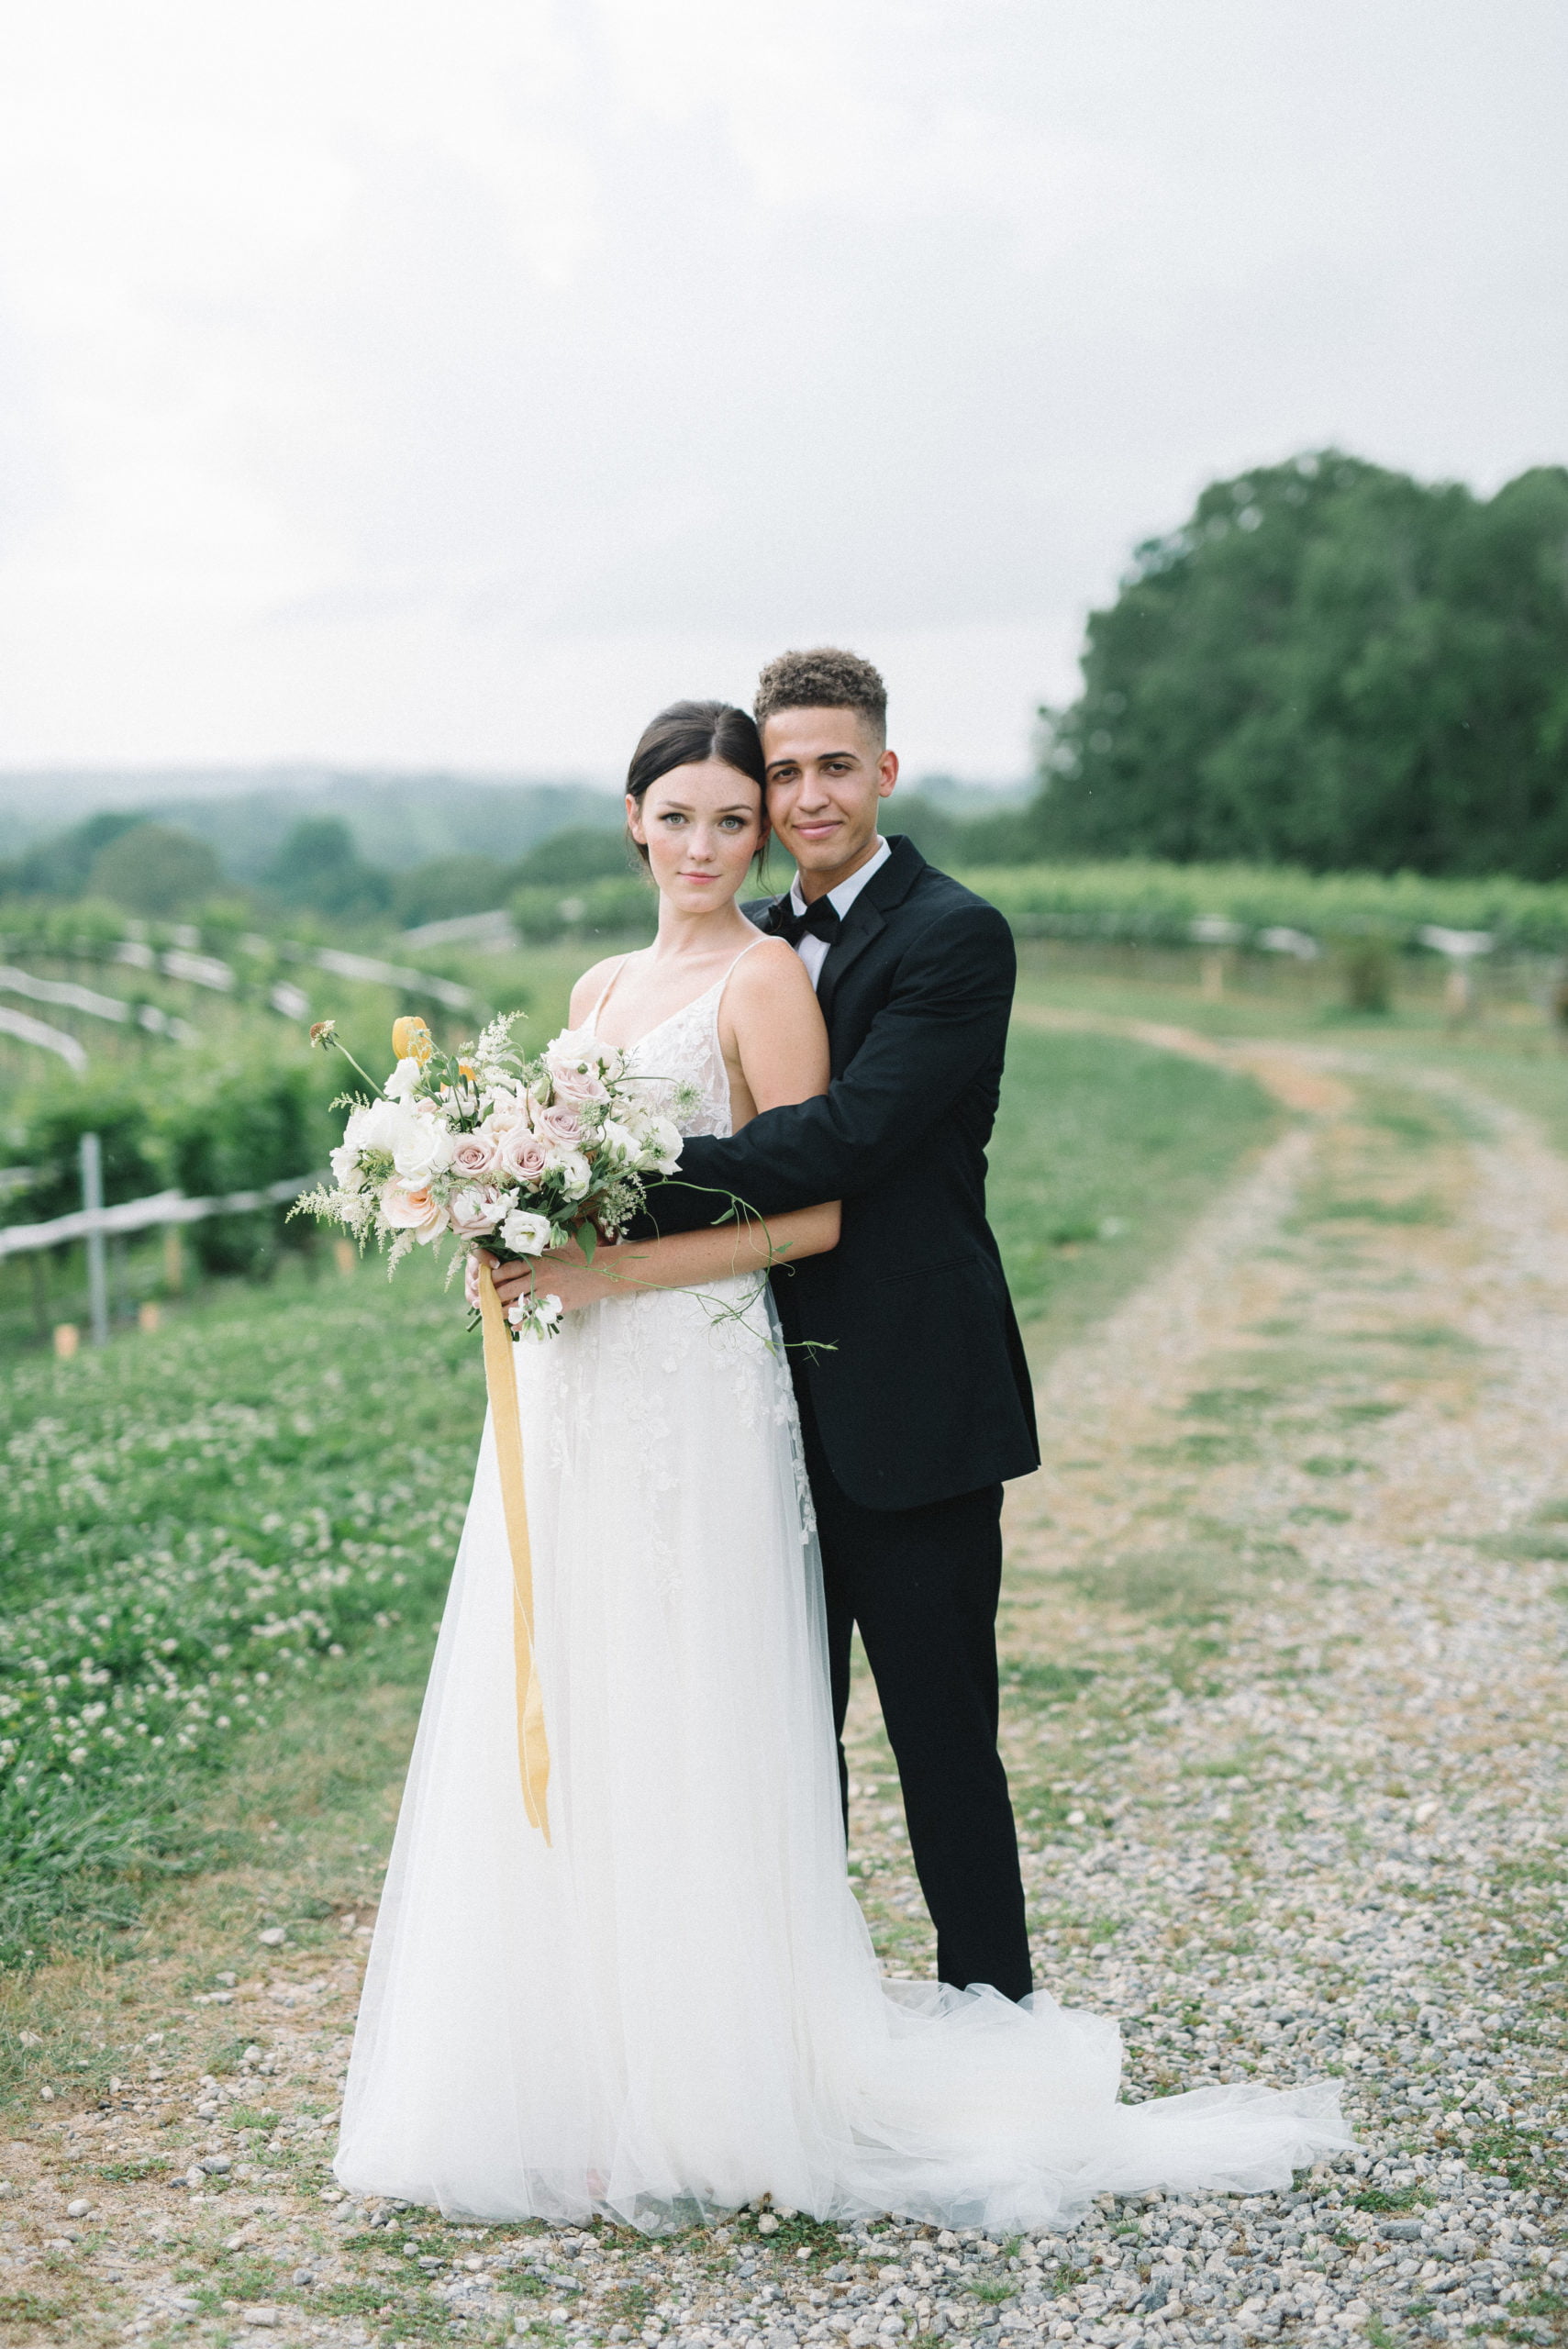 Beautiful wedding couple posing for photographer at vineyard in GA